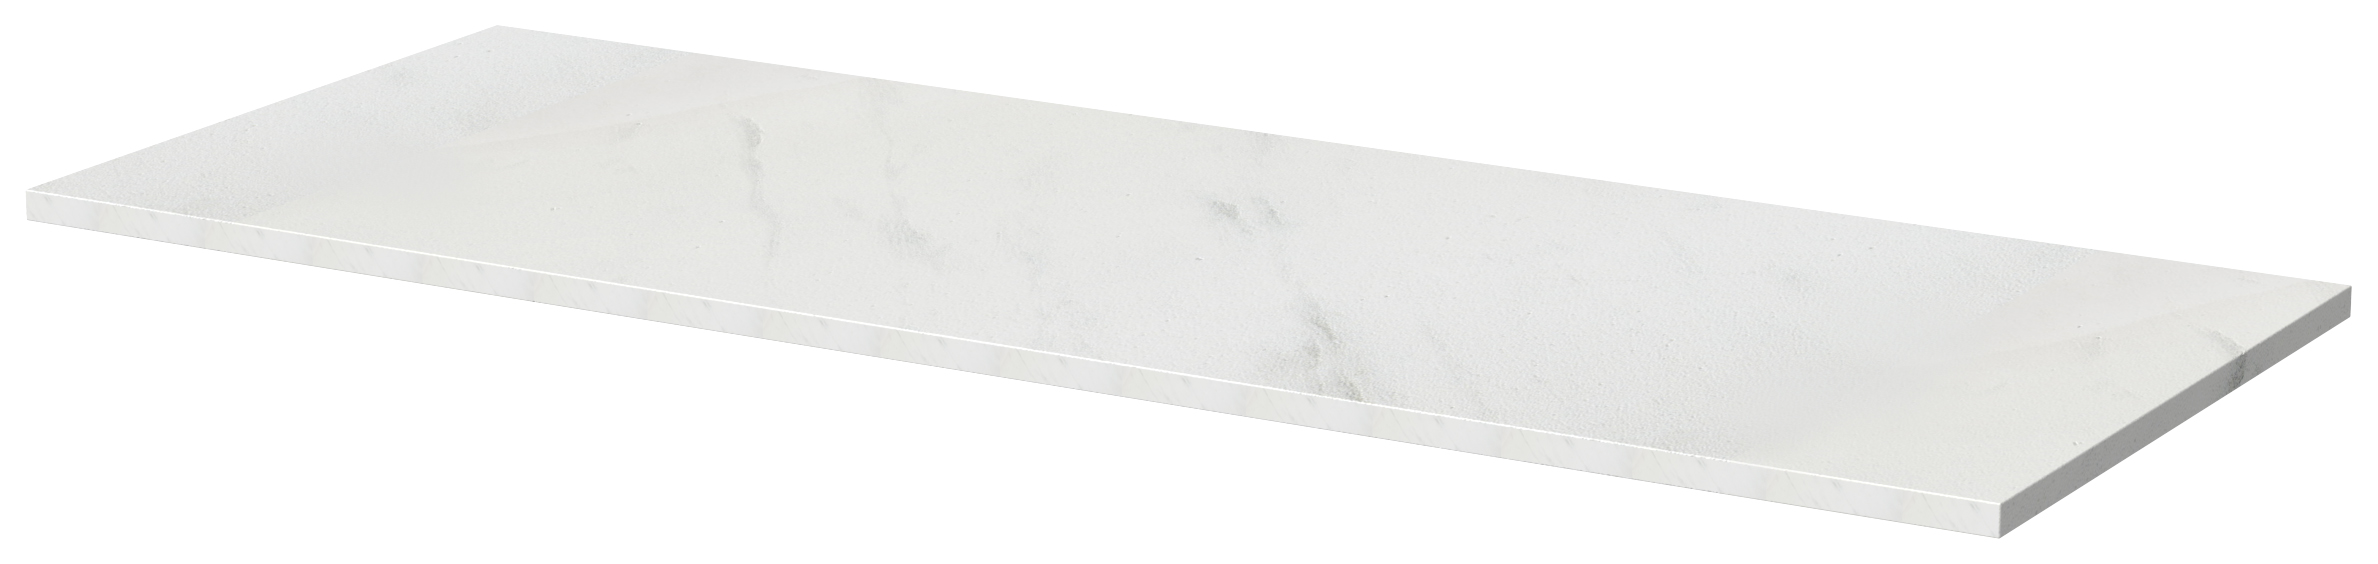 Image of Wickes Tallinn White Marble Worktop - 465 x 1310 x 18mm